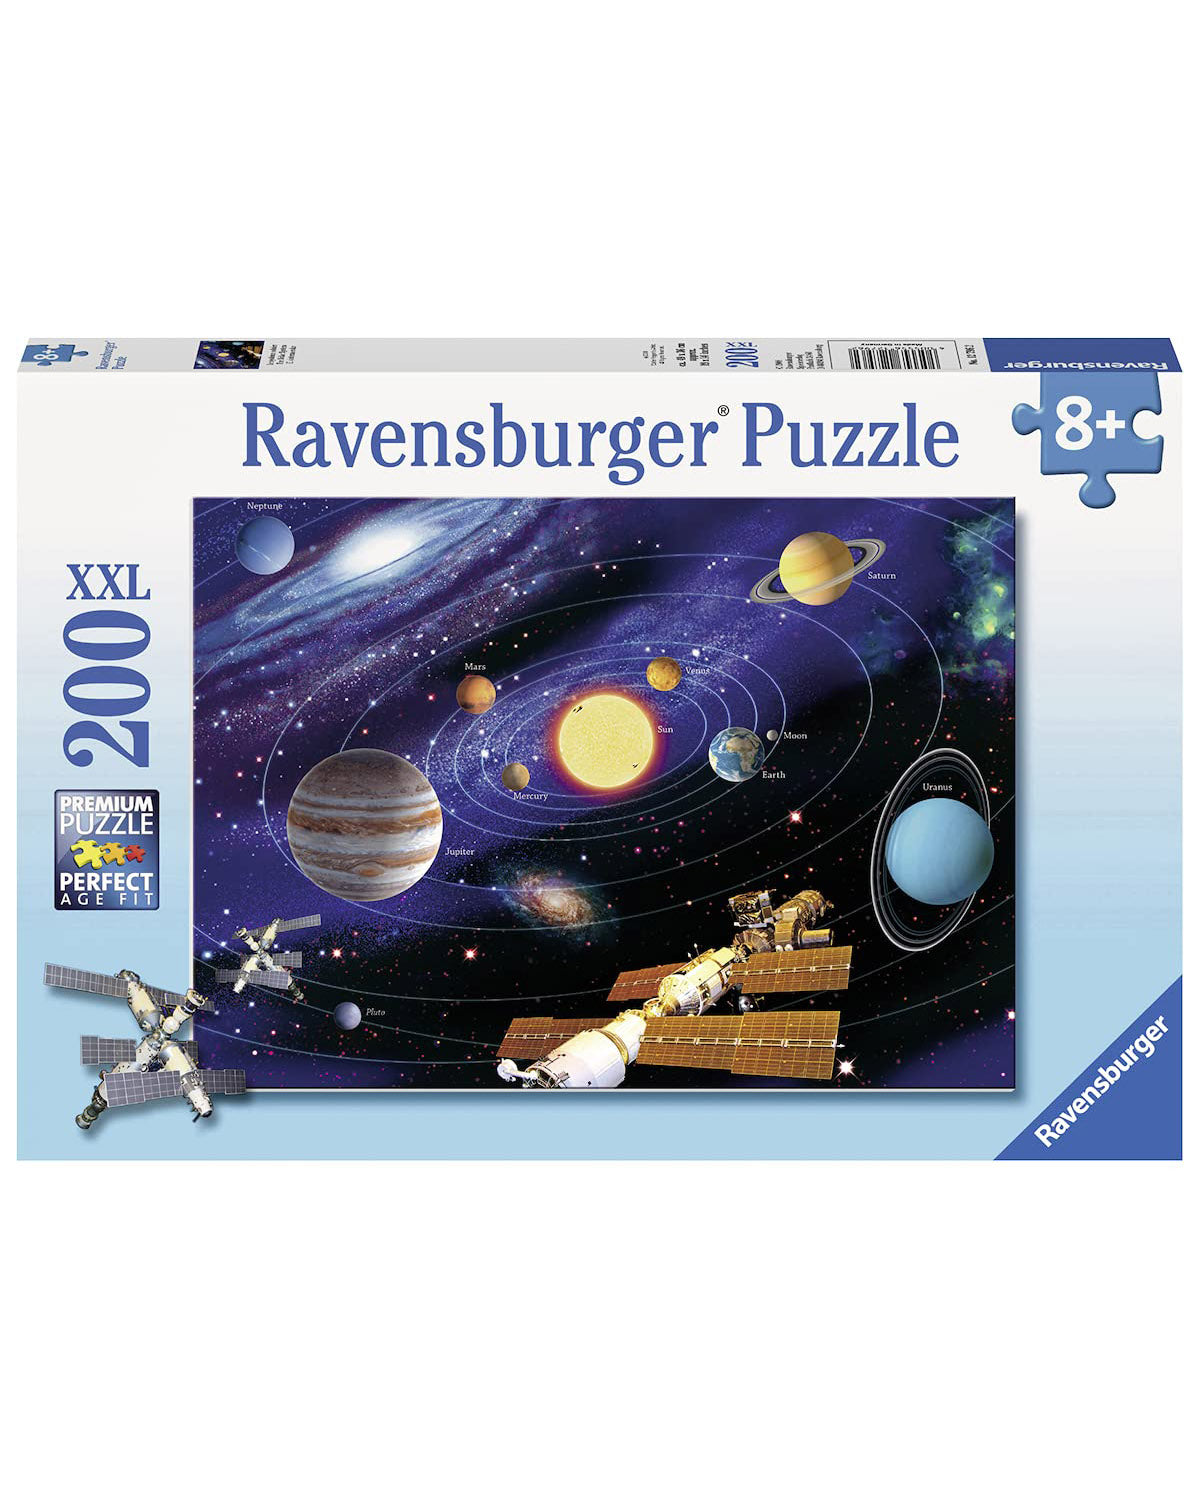 Ravensburger Puzzle - Cosmic Exploration 200pc